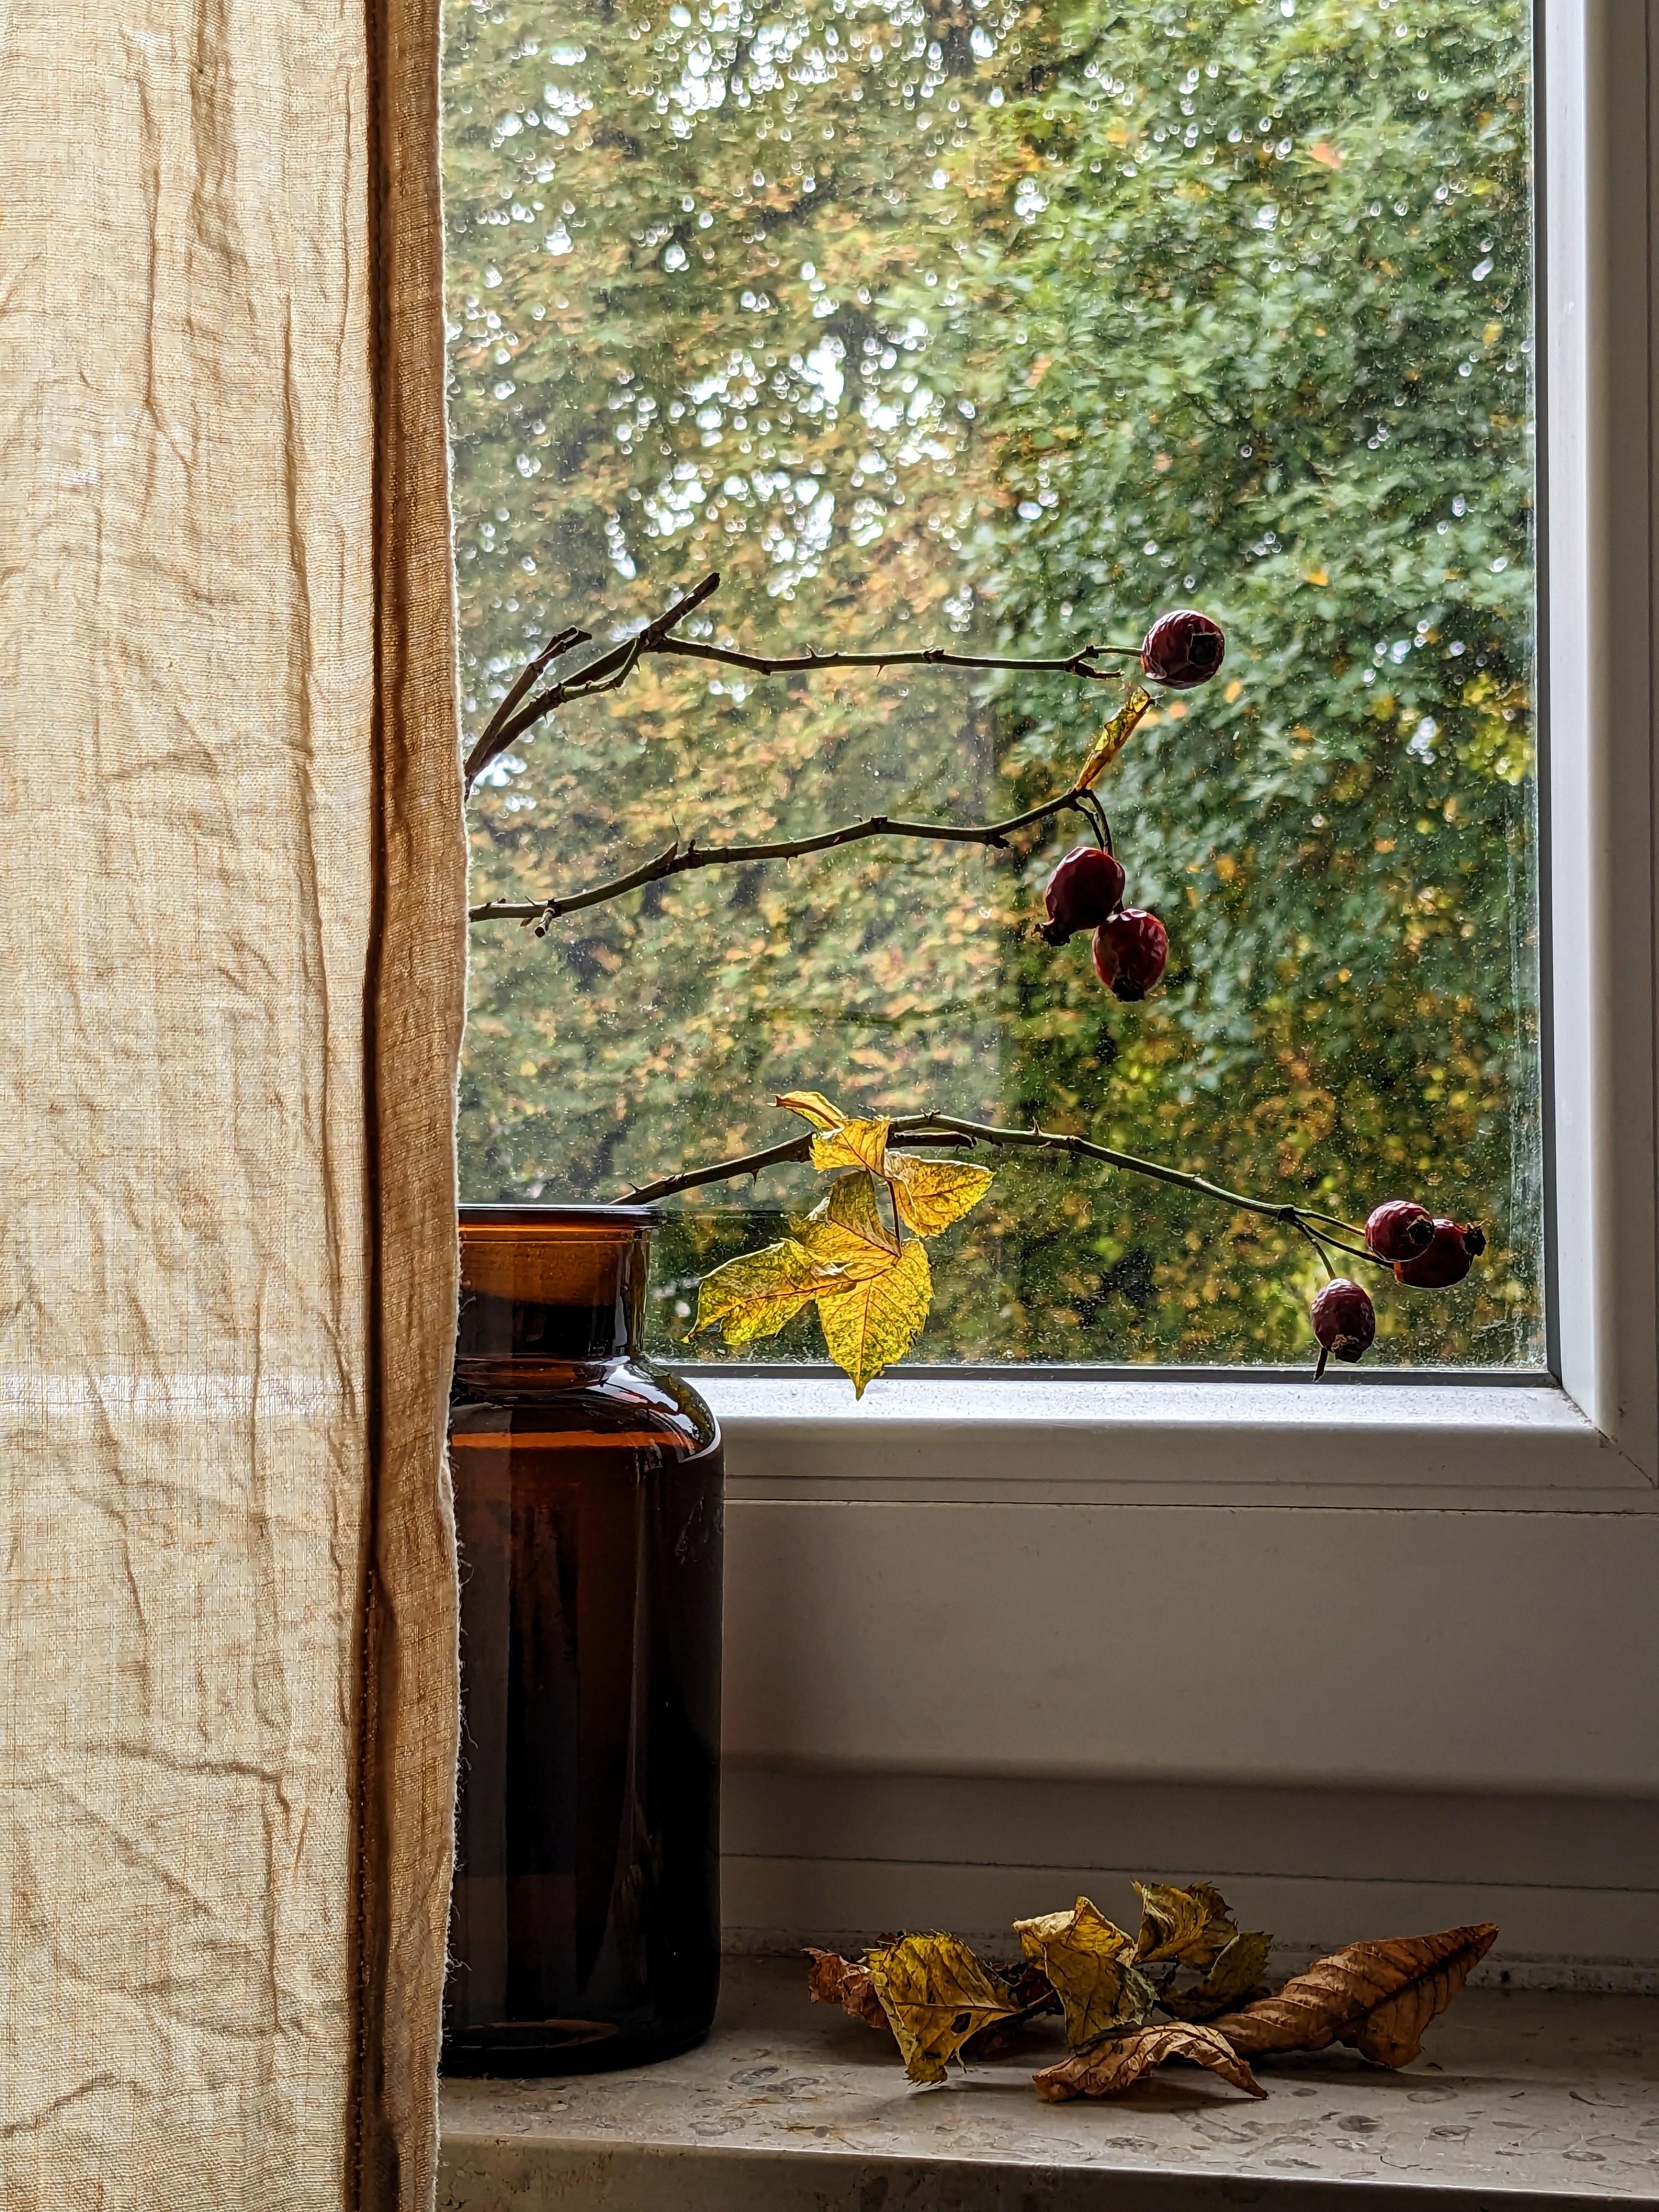 Herbstausblick.
#couchliebt #herbst #fenster #autumn #cozyliving #fallvibes